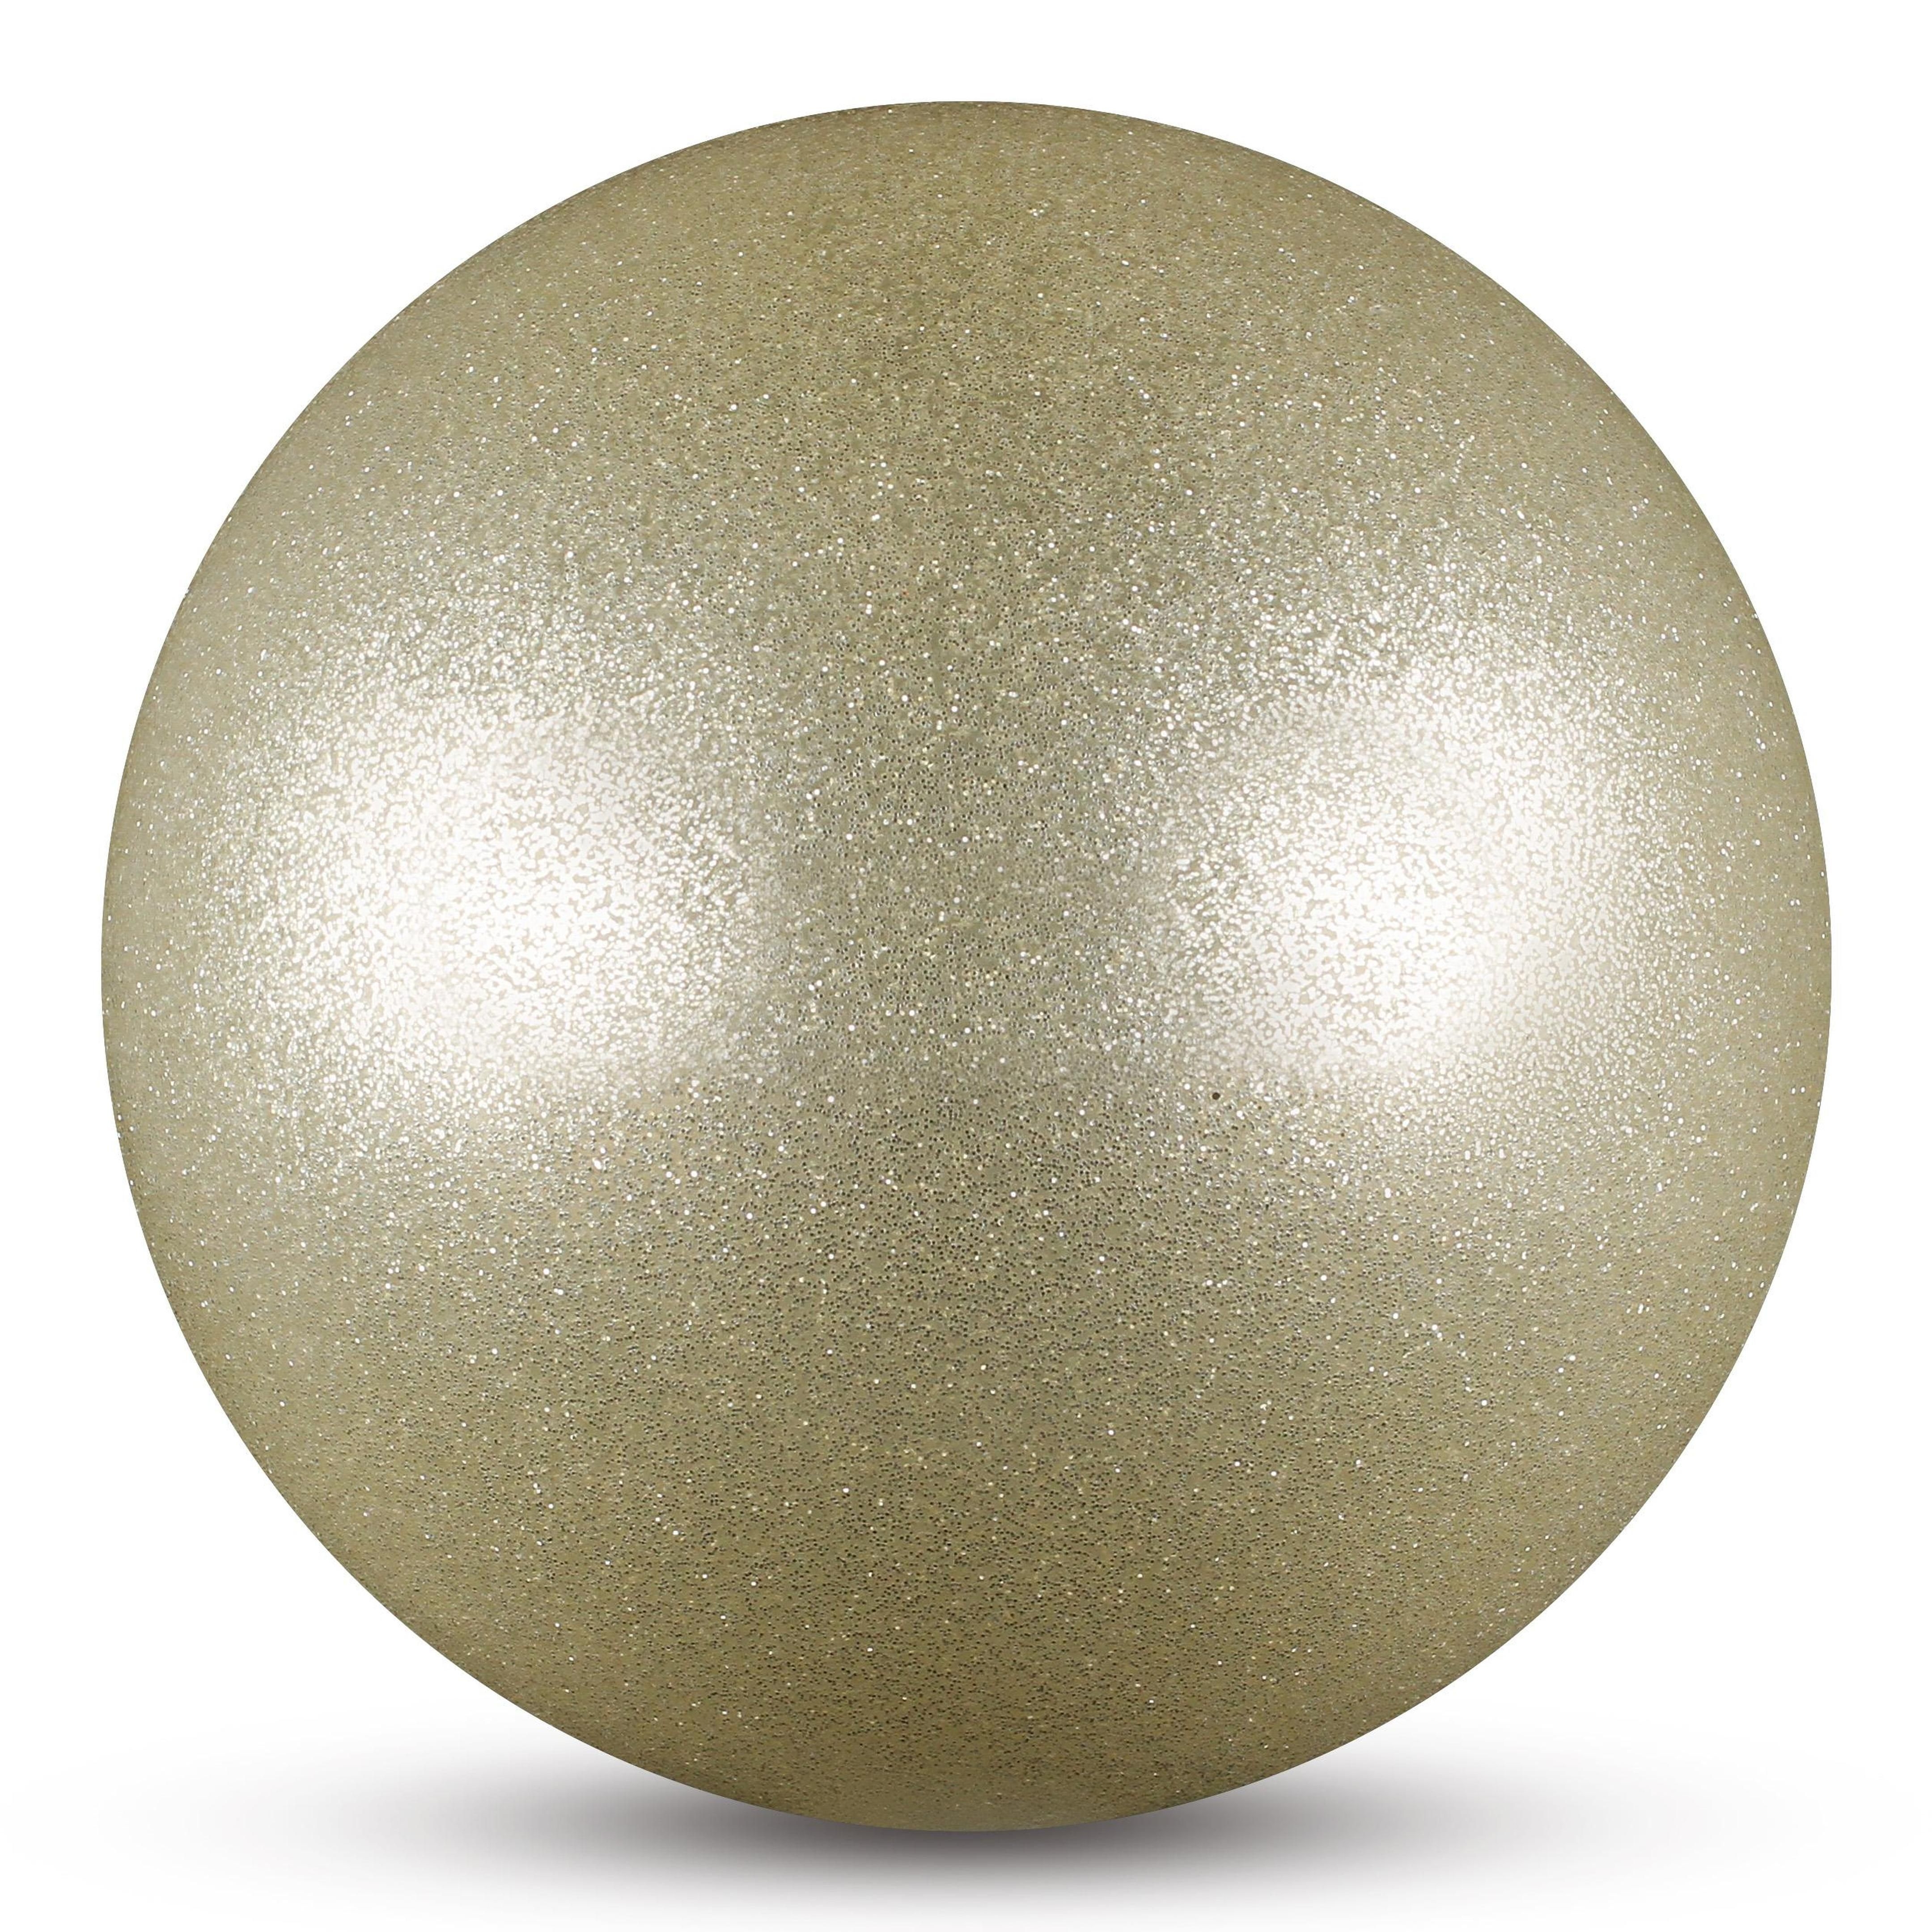 Pelota Metalizada + Glitter 400 g INDIGO 19 cm Plata